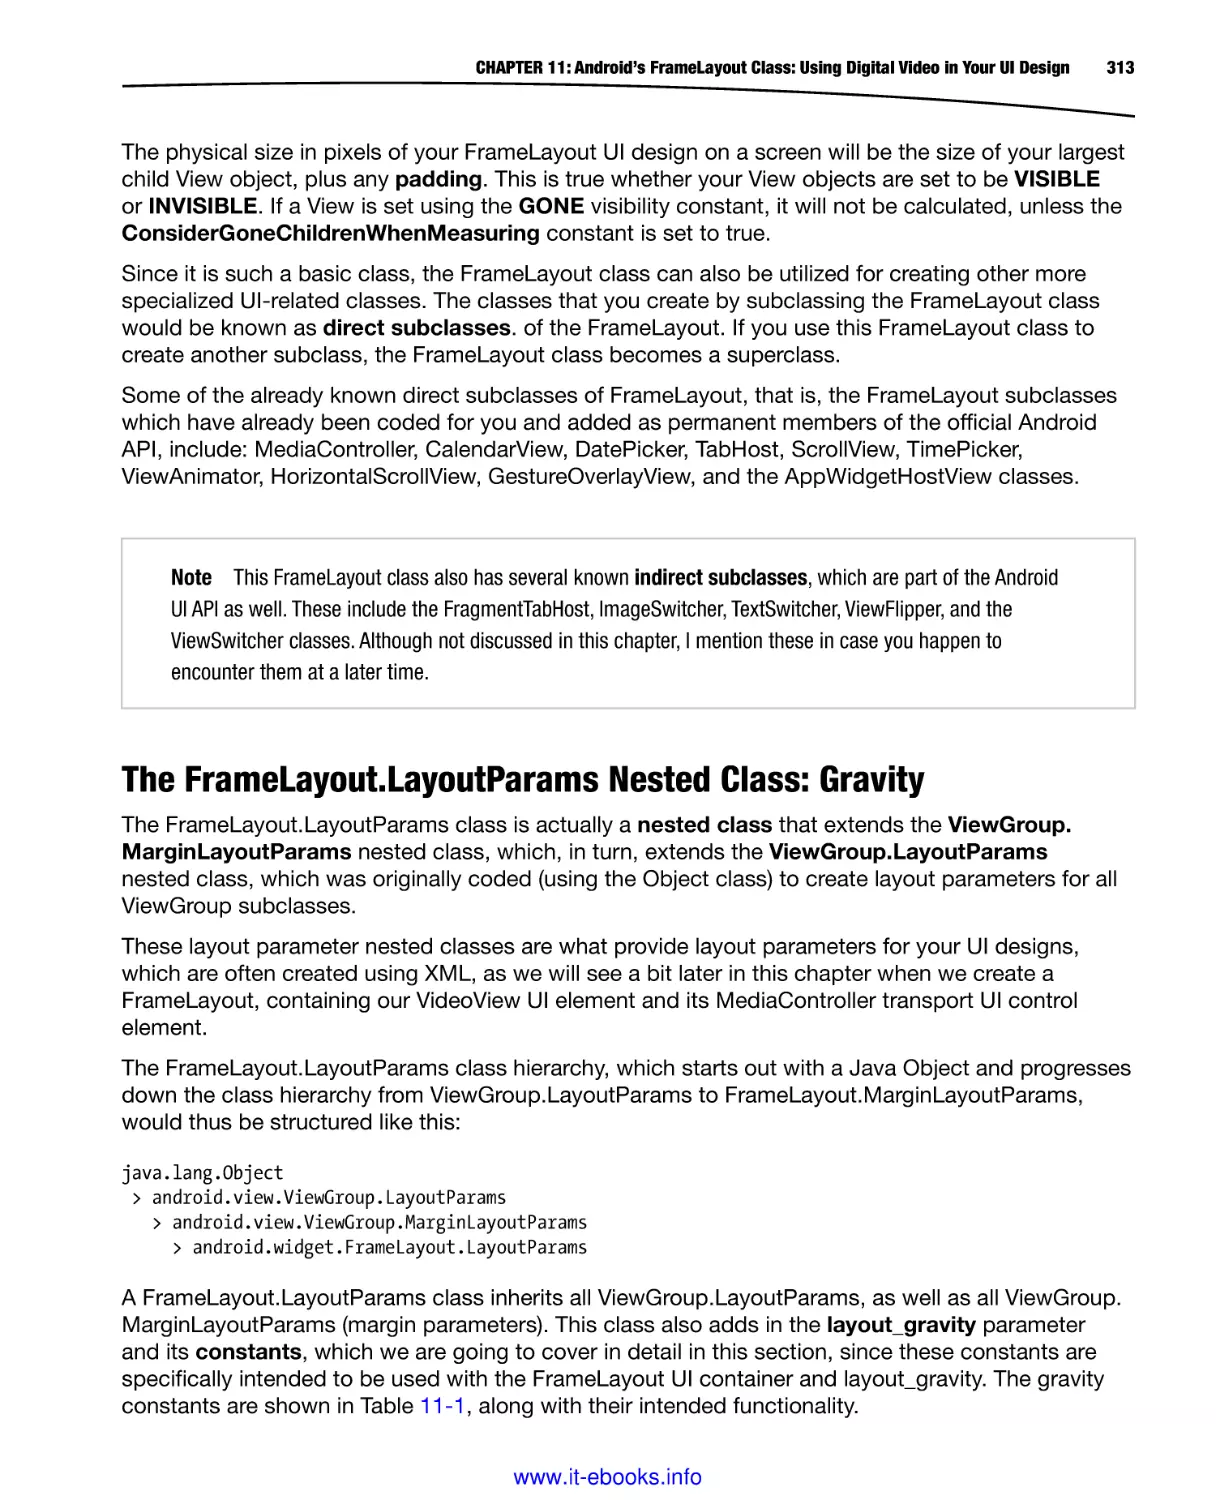 The FrameLayout.LayoutParams Nested Class